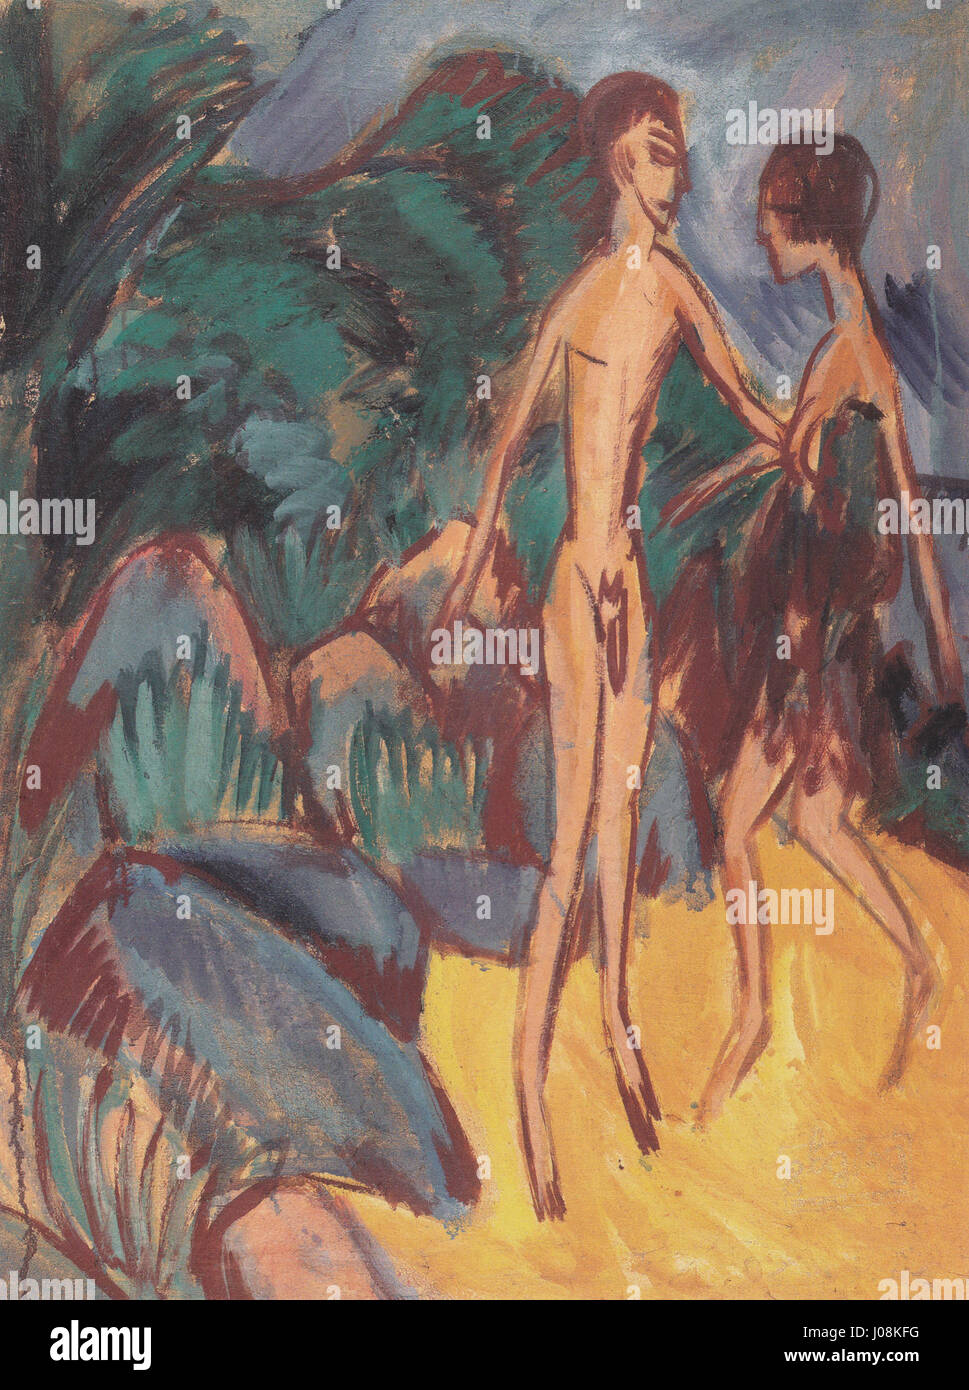 Ernst Ludwig Kirchner - Nackter Jüngling und Mädchen am Strand Foto Stock